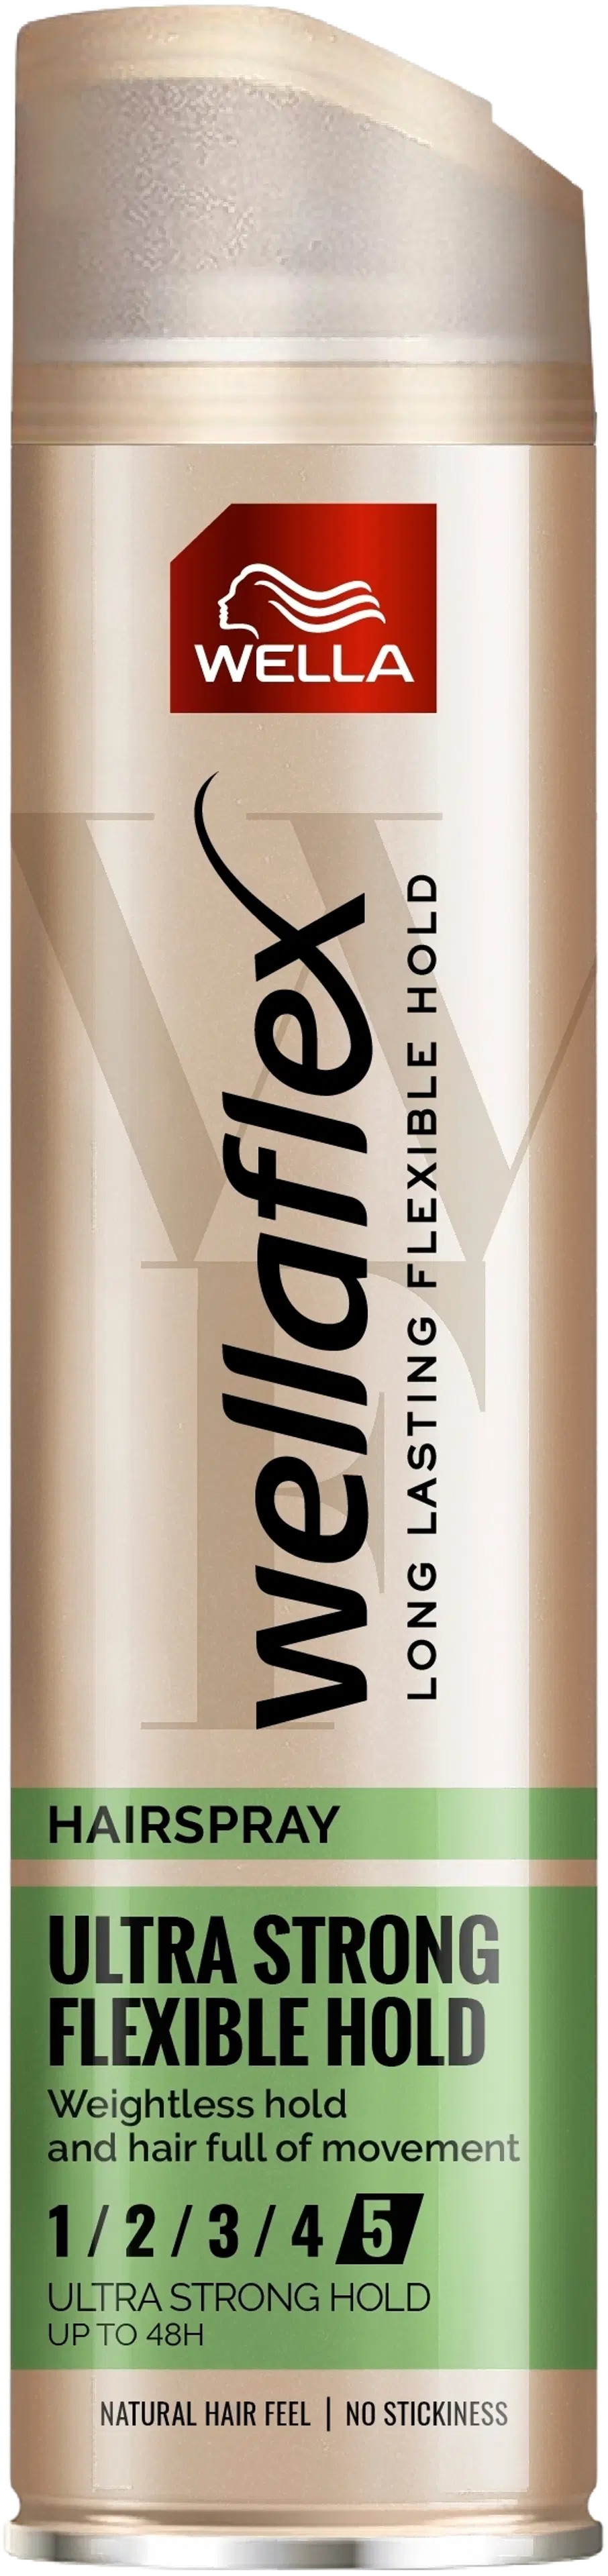 Wella Wellaflex Hairspray Ultra Strong Flexible Hold 5 hiuskiinne 250 ml